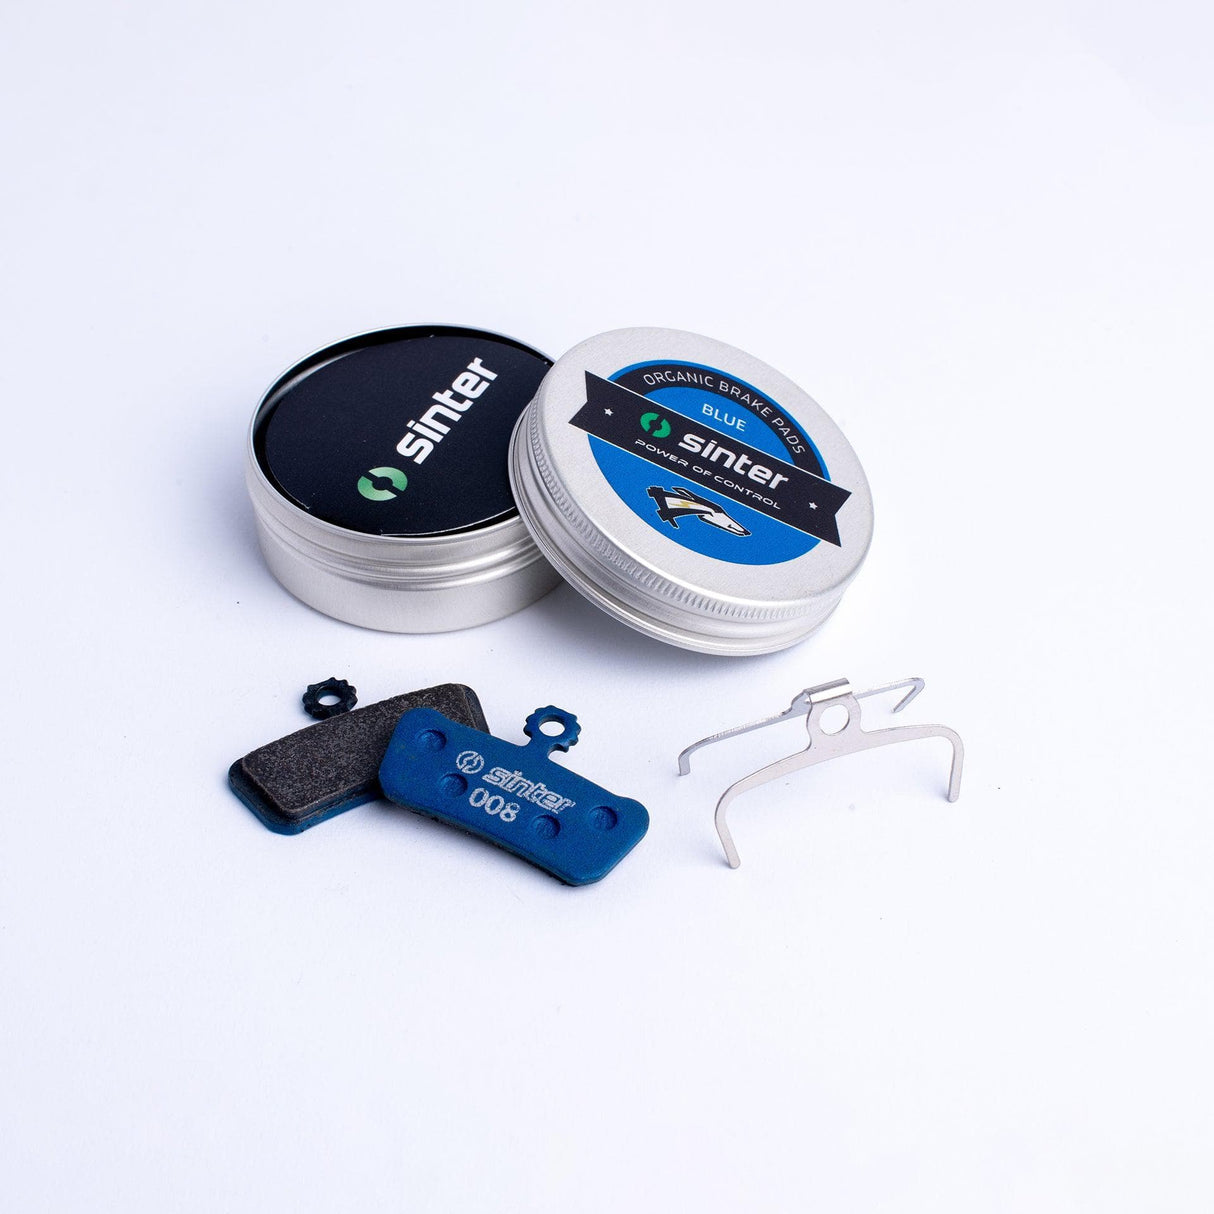 Sinter Disc Brake Pads - 008 Avid Sram S530 - Single Pair Metal Can Carded: Blue